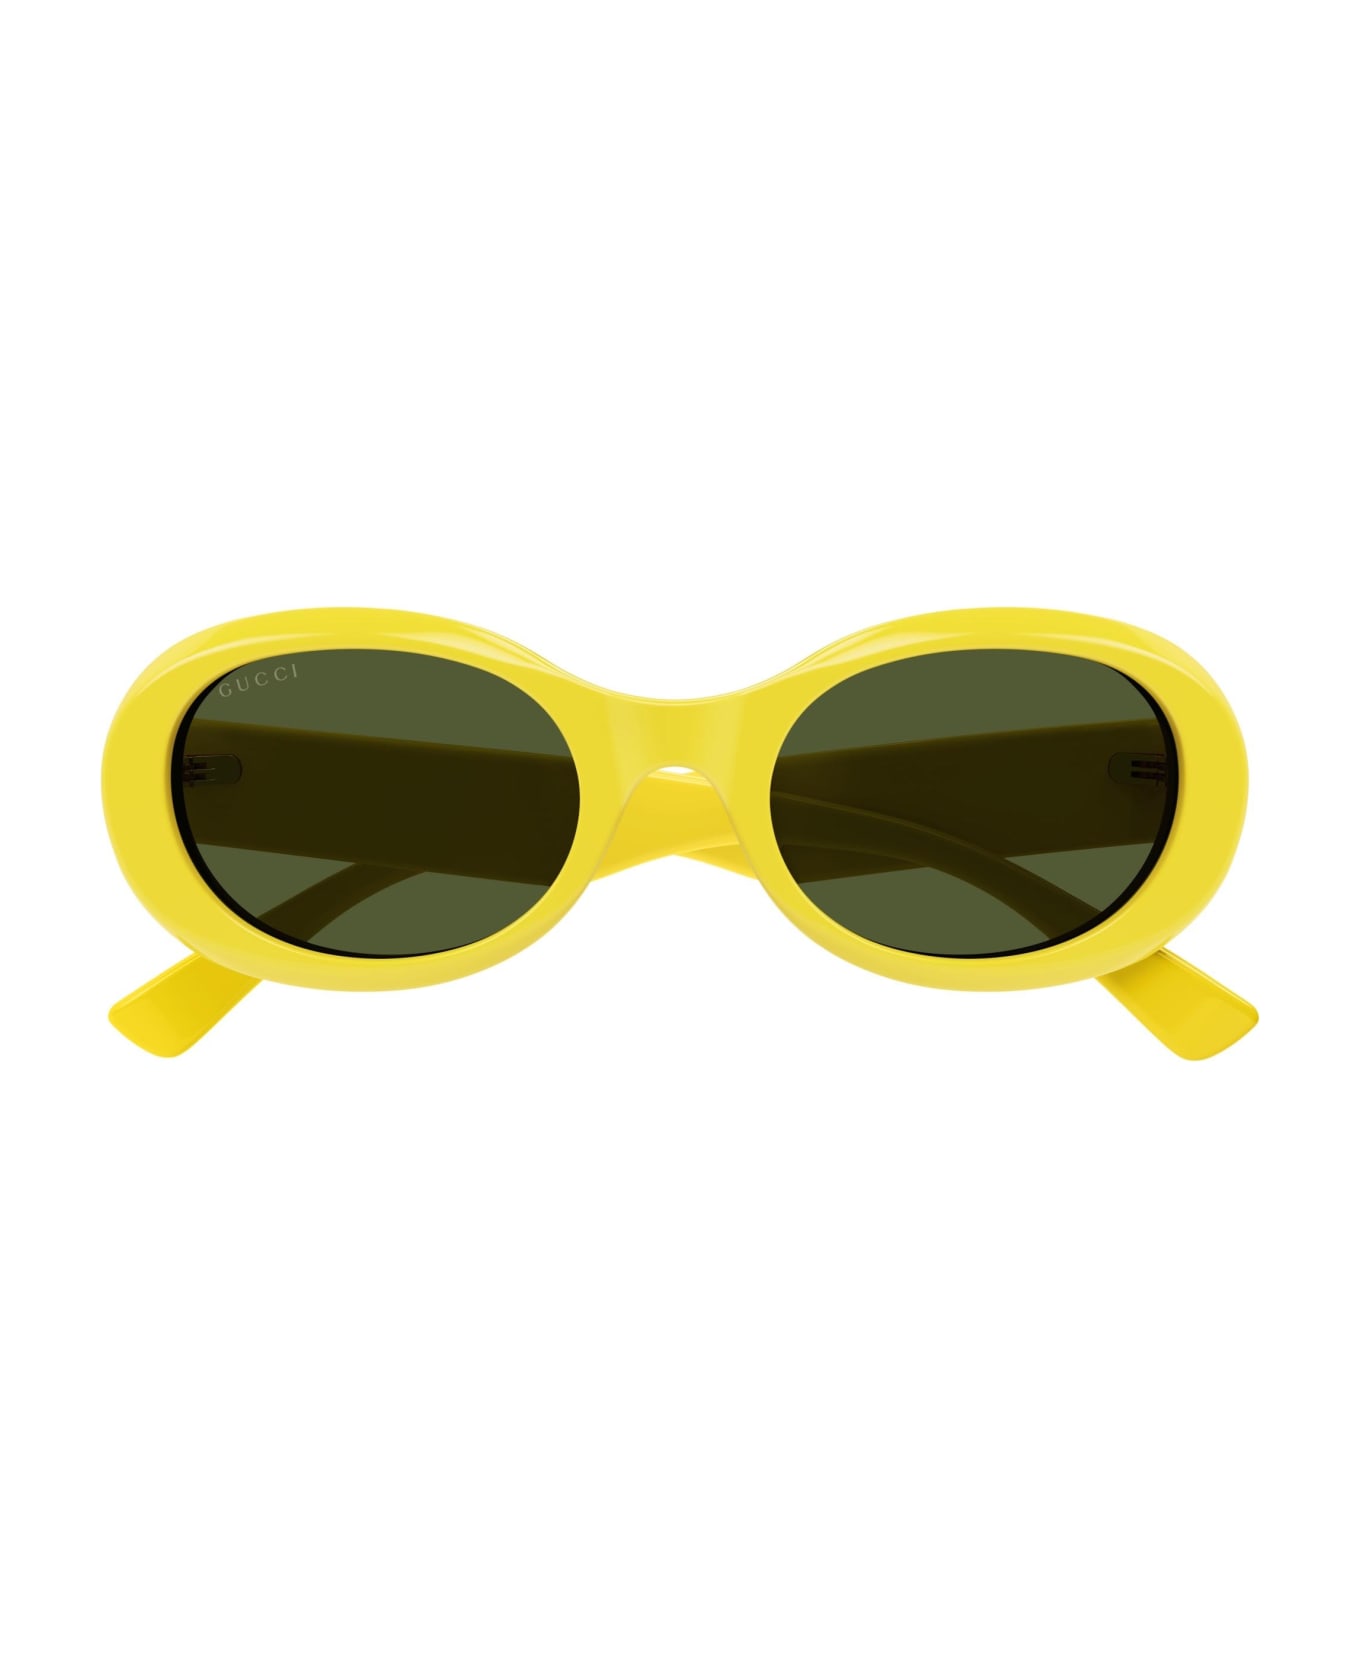 Gucci Eyewear Sunglasses - Giallo/Verde サングラス